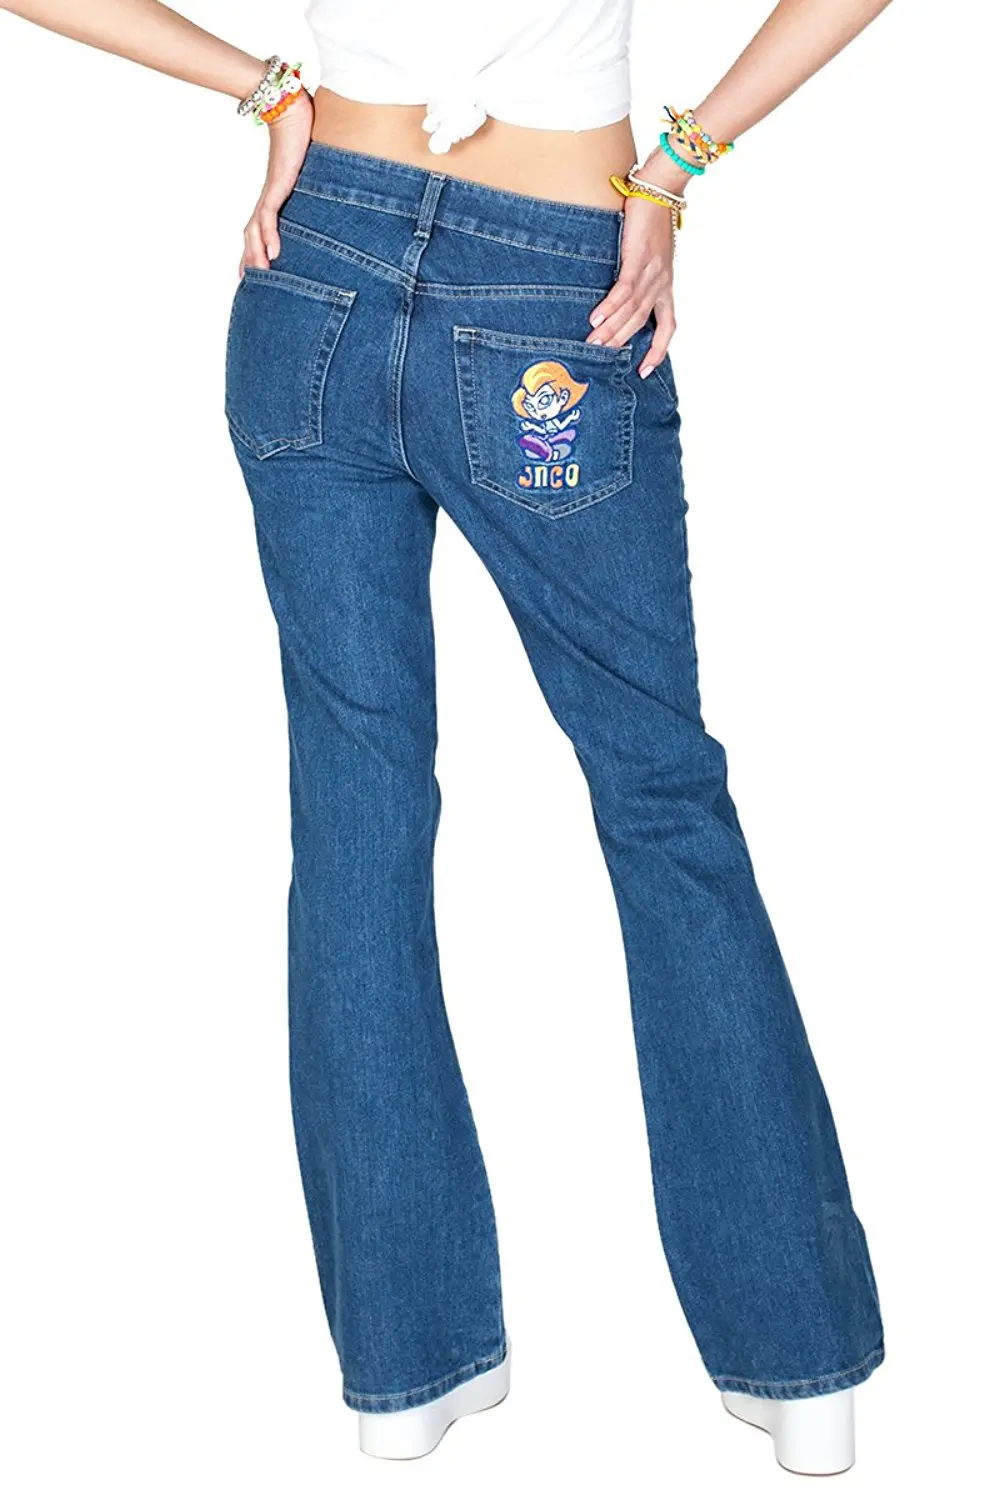 jnco jeans price